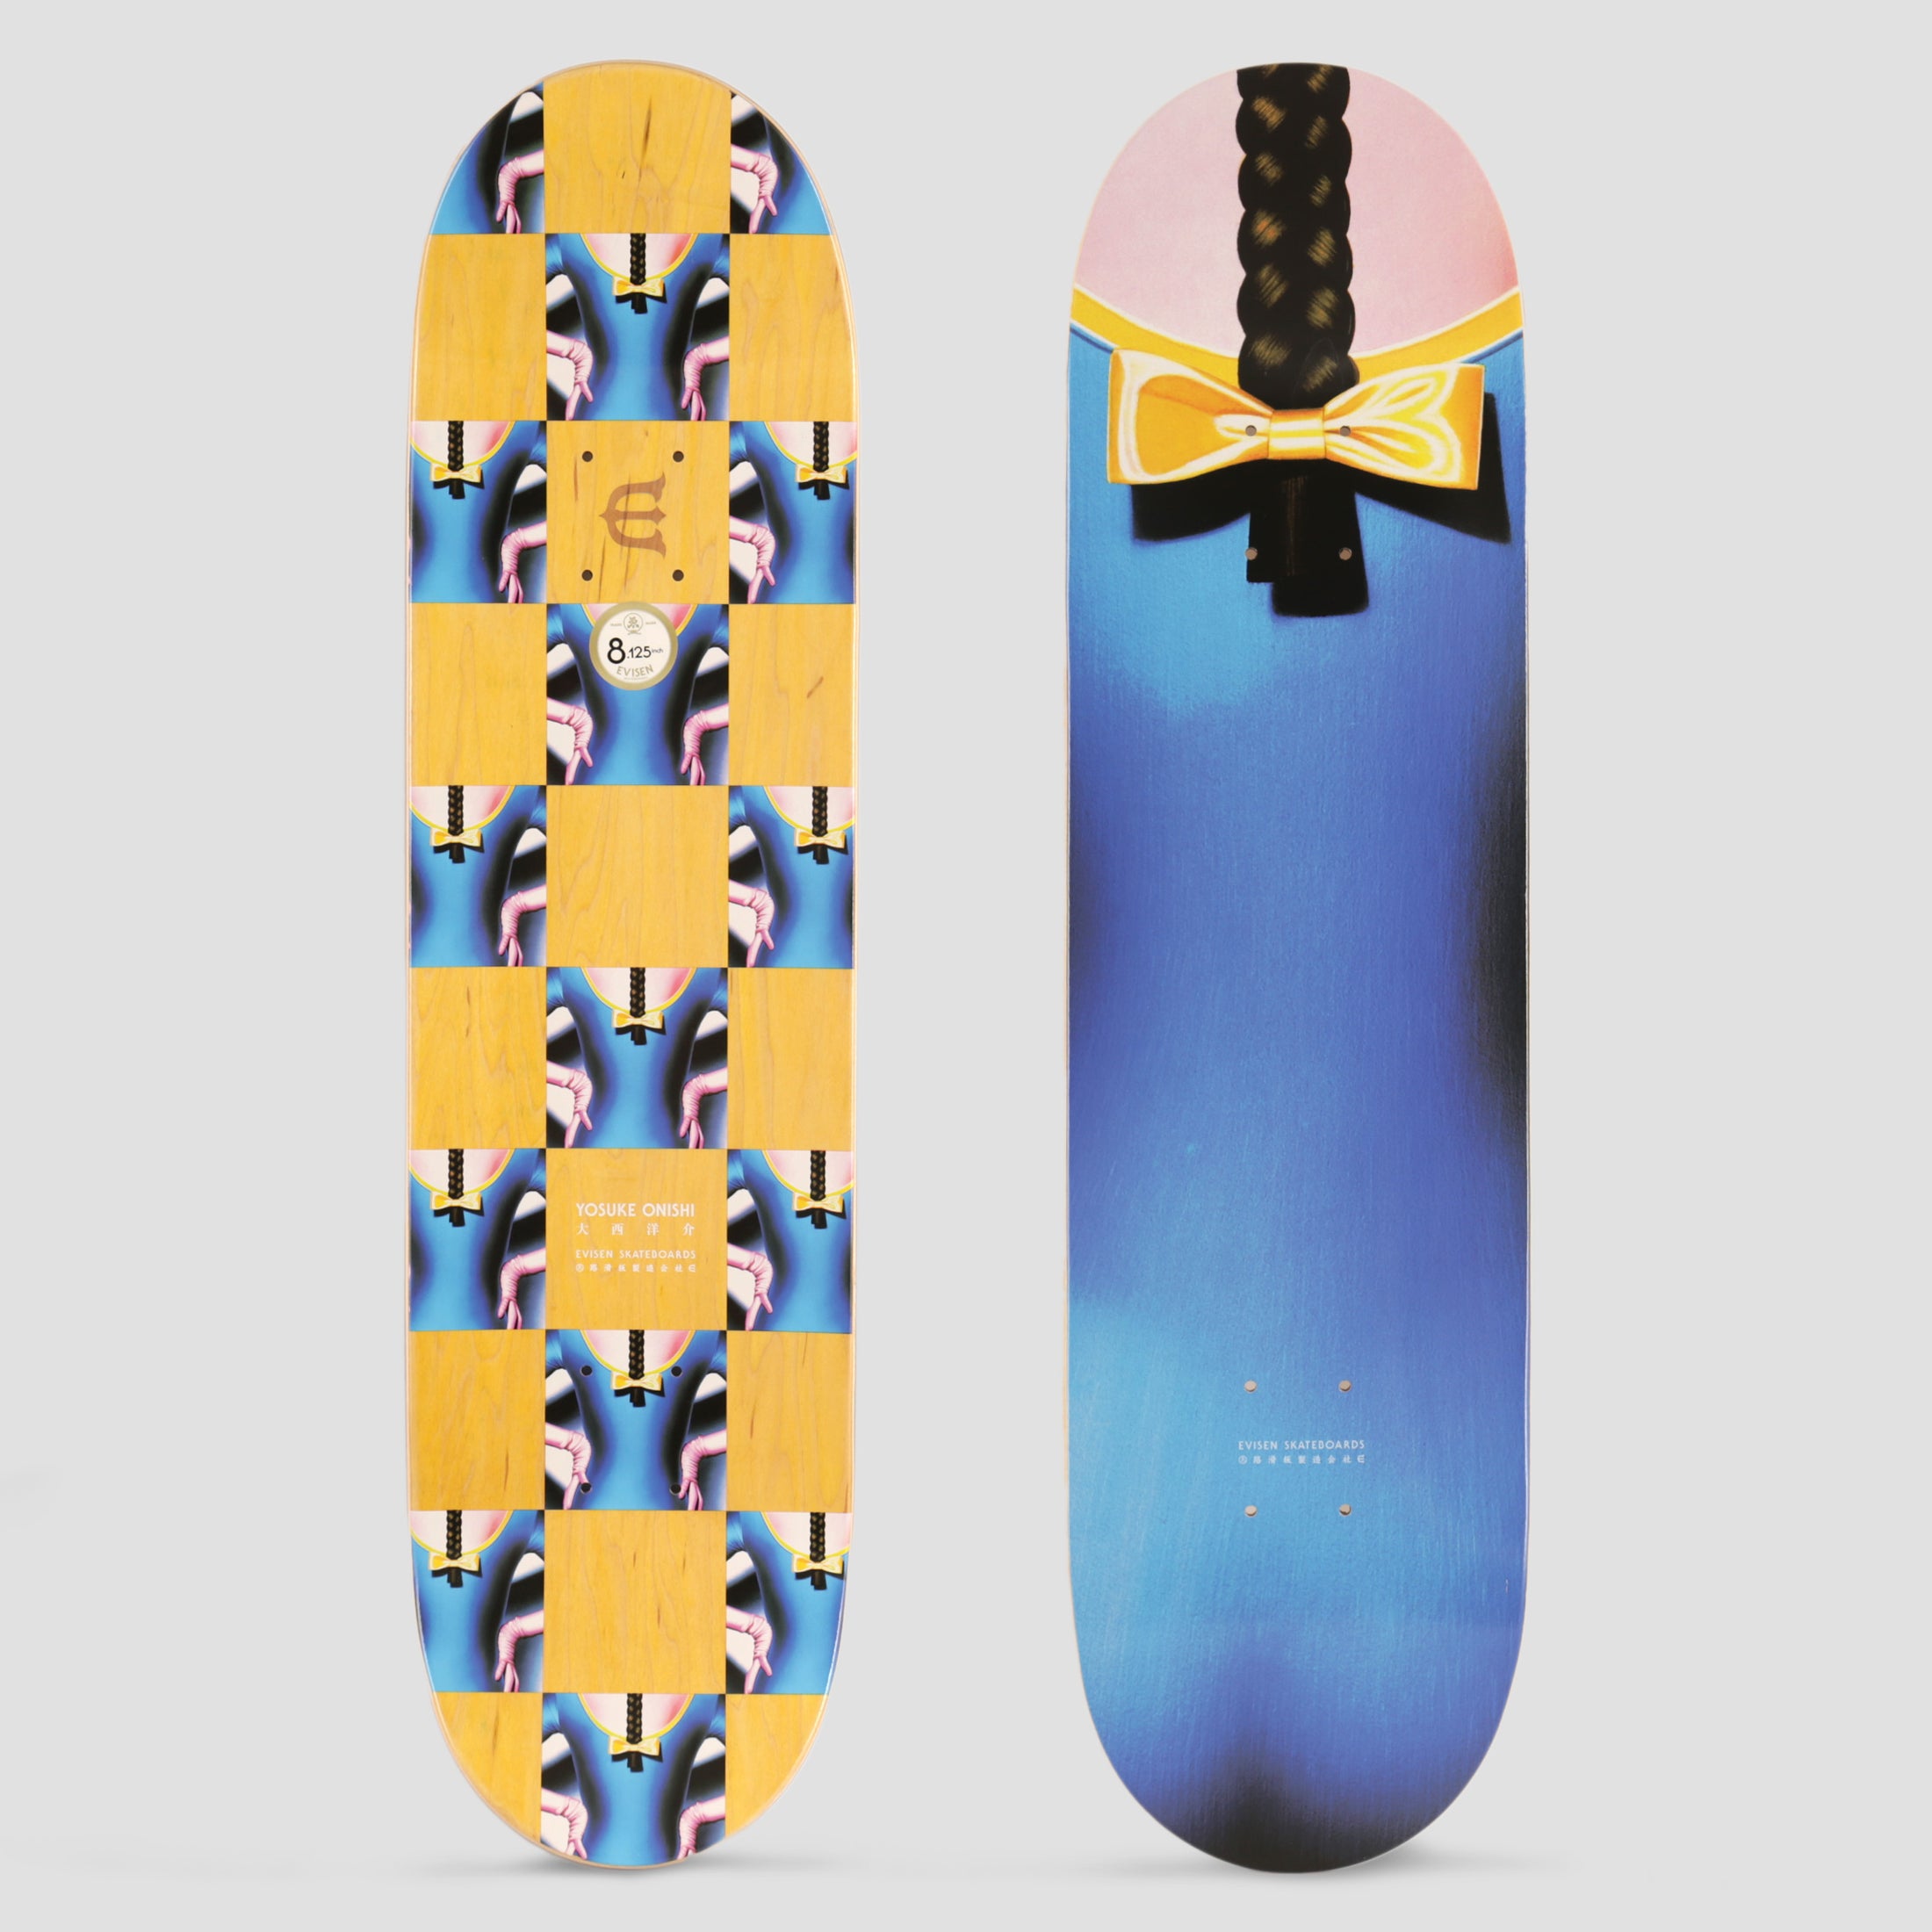 Evisen 8.38 Yosuke Onishi Yellow Ribbon Skateboard Deck